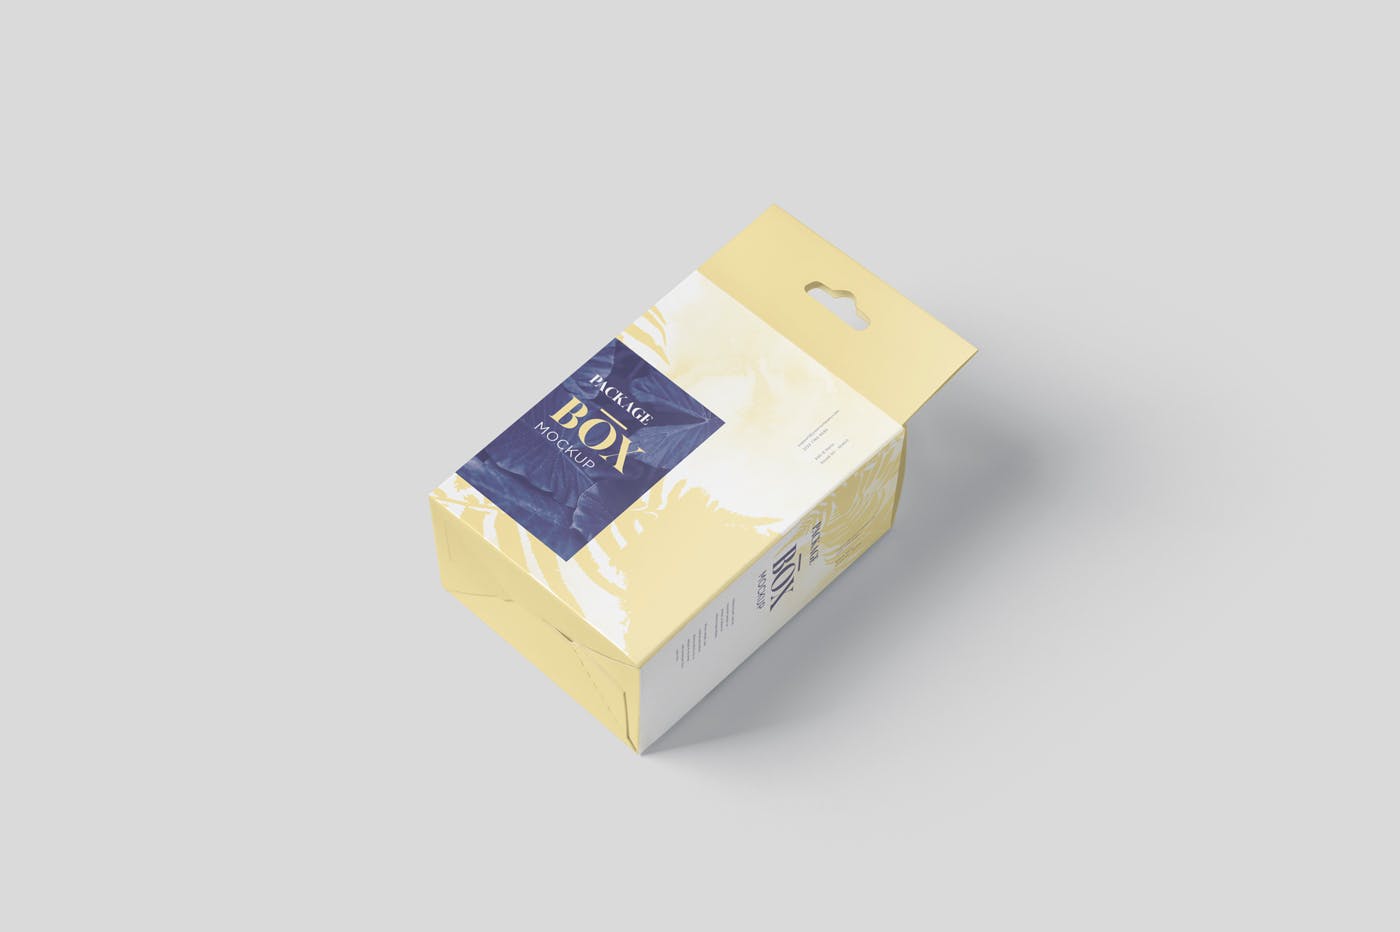 挂耳式扁平矩形包装盒素材库精选模板 Package Box Mockup Set – Slim Square with Hanger插图(5)